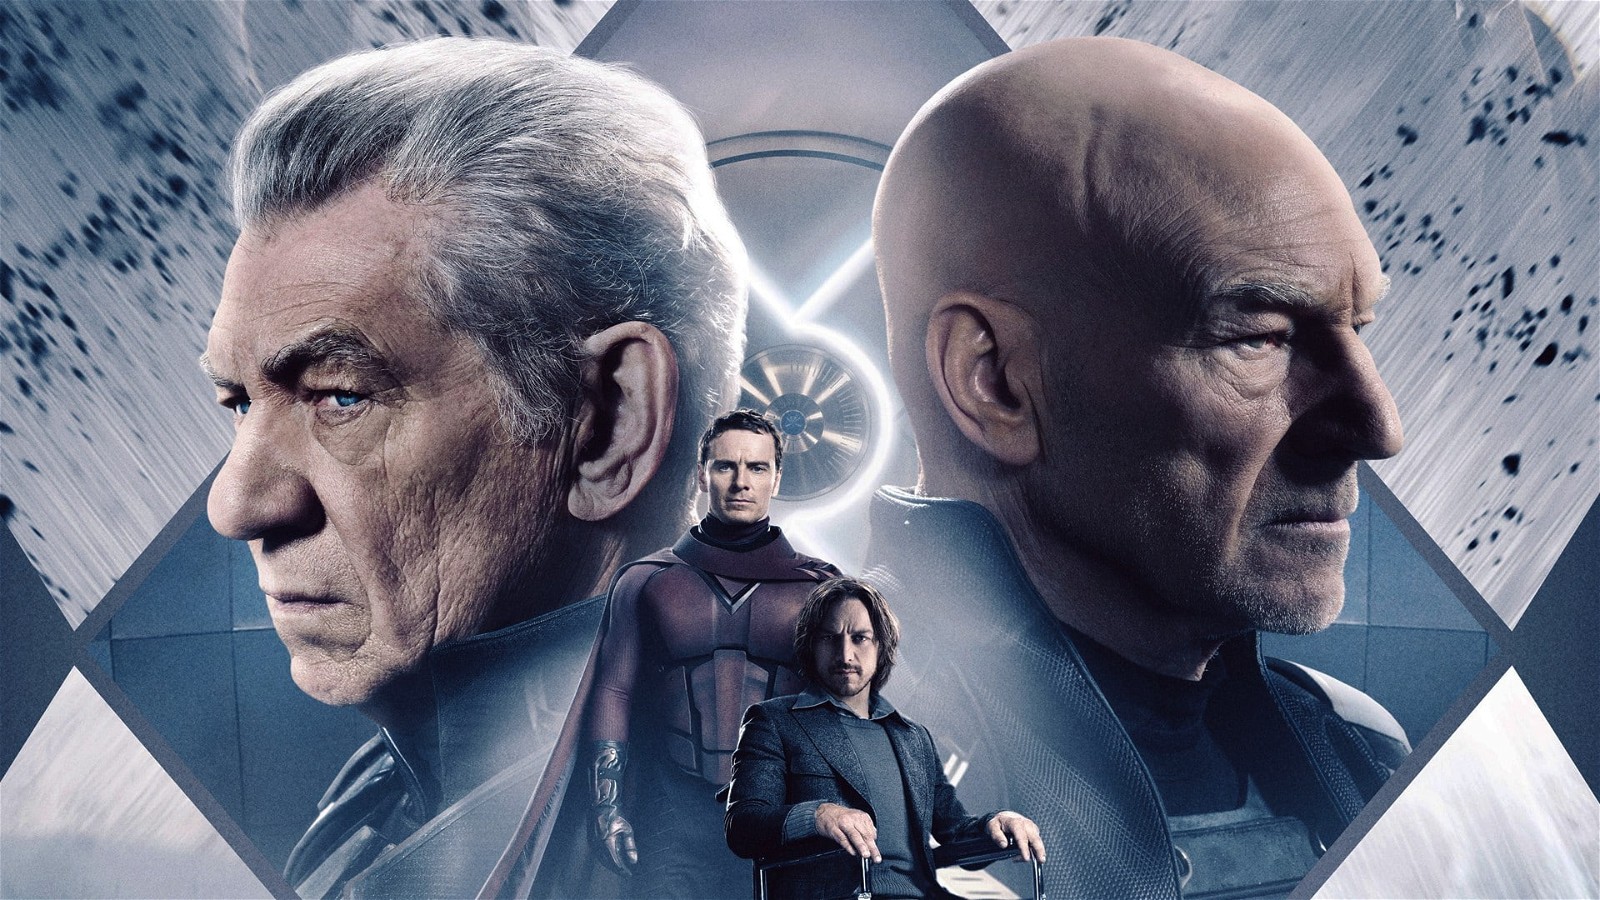 Professor X and Magneto in X-Men movies